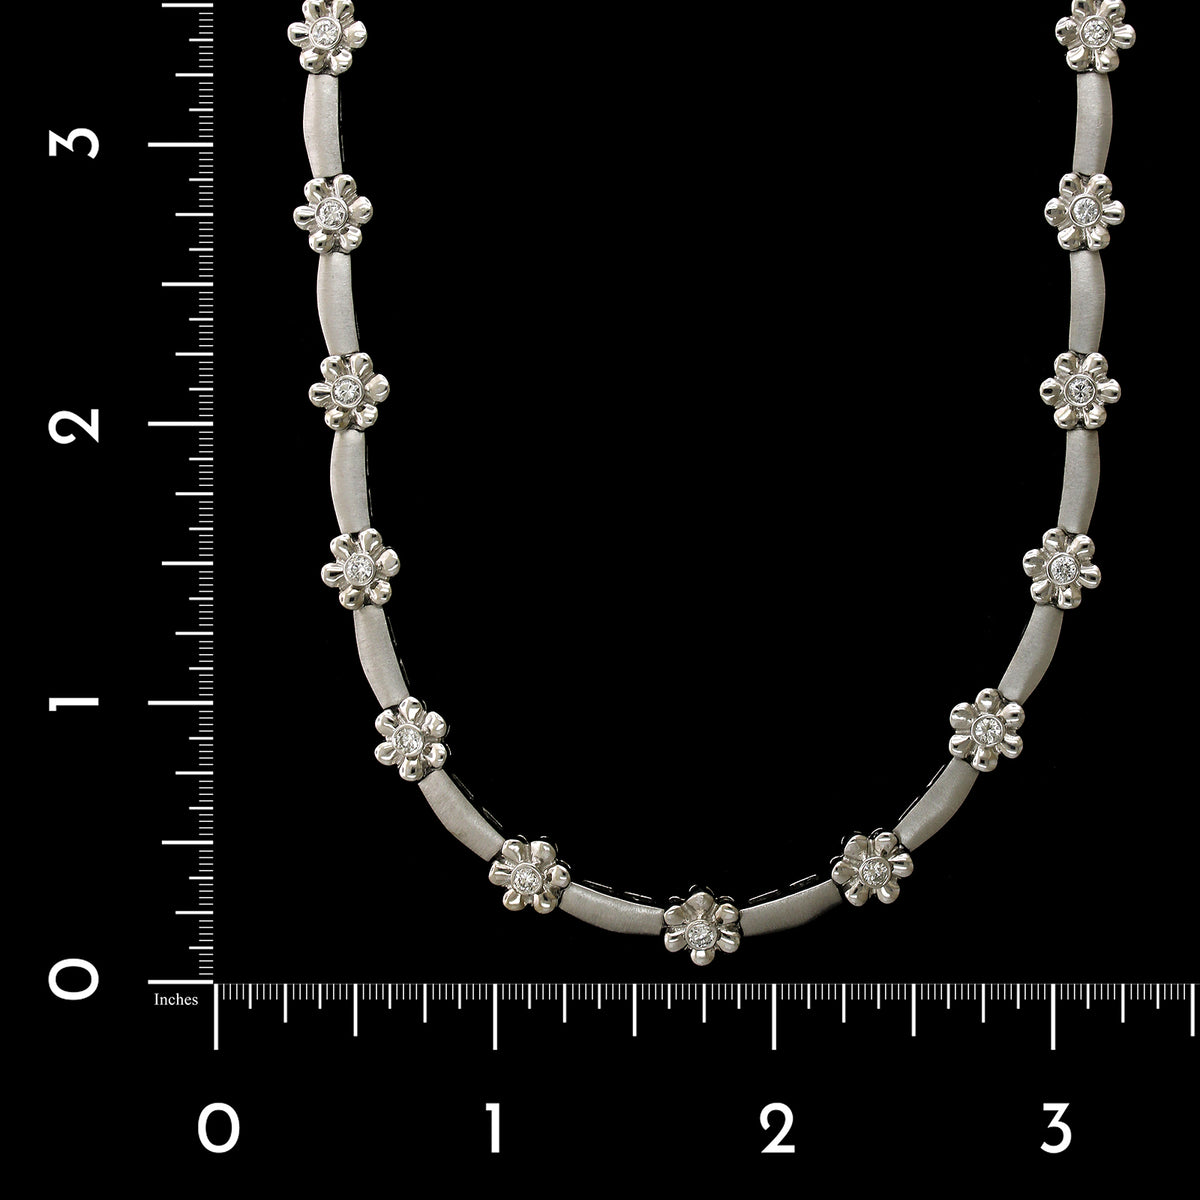 14K White Gold Estate Diamond Necklace